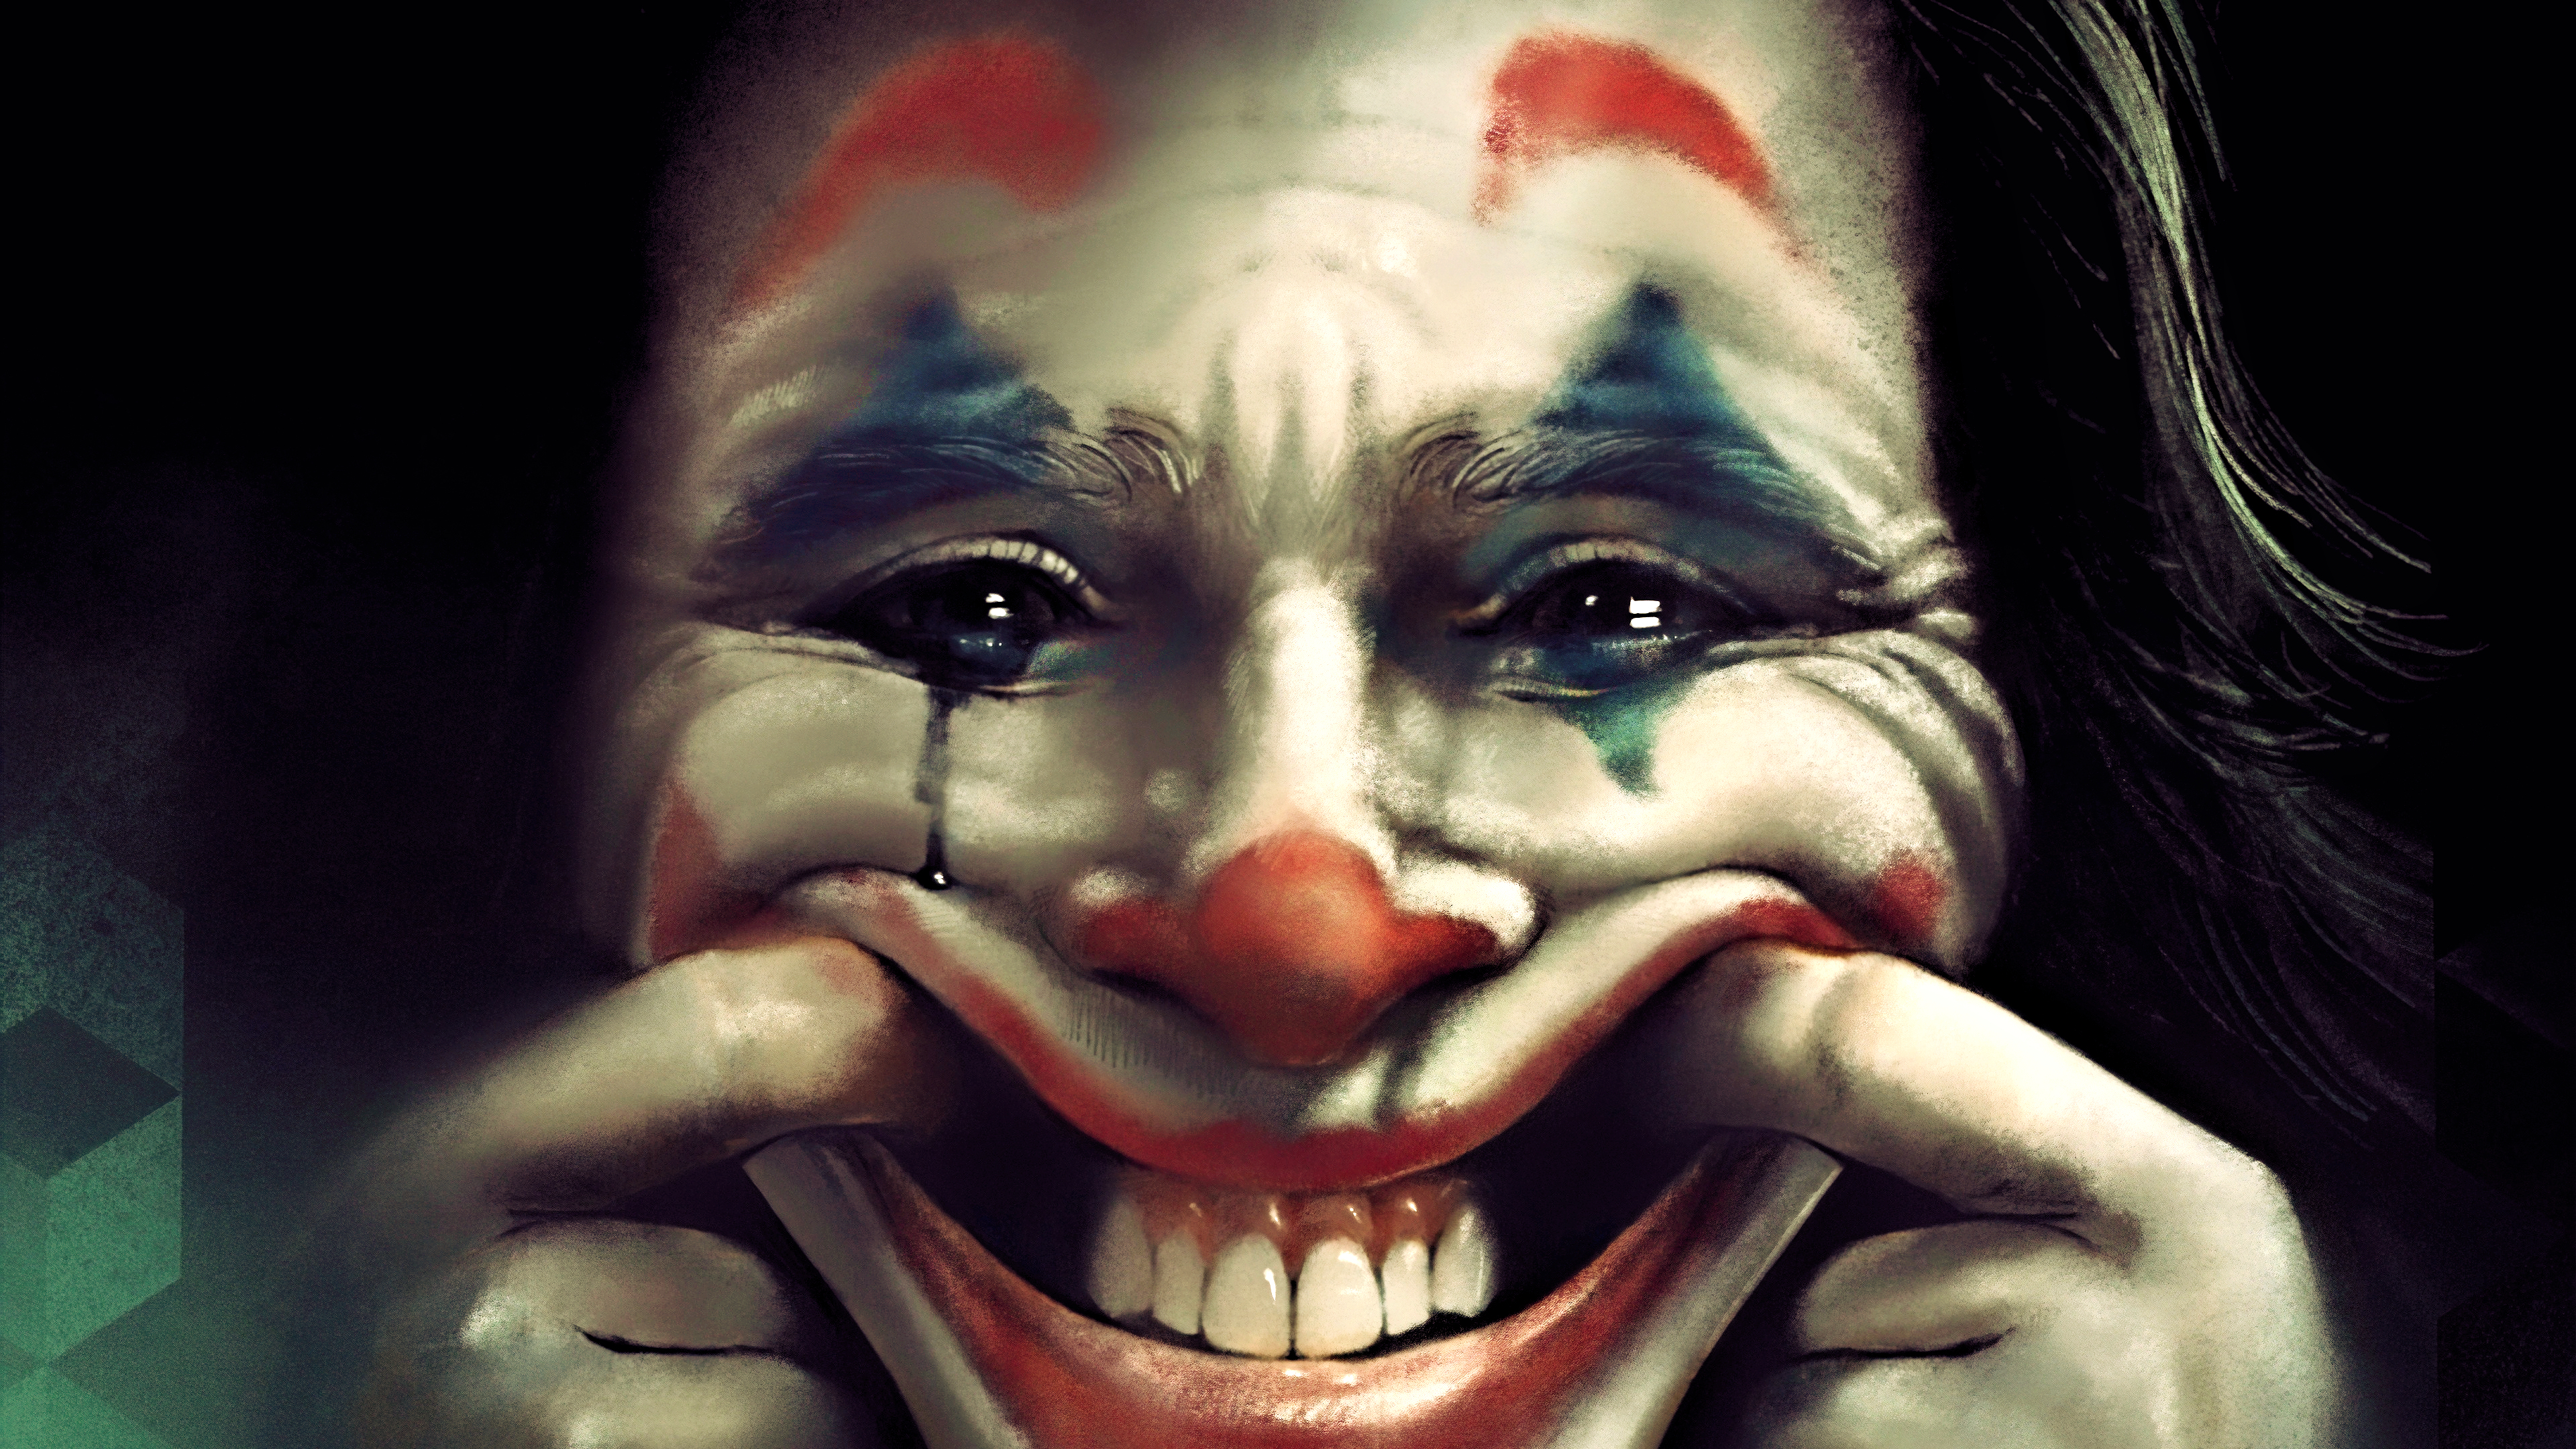 General 3840x2160 villains super villain comics movie characters digital art artwork fictional fictional character Joker Batman clown Joaquin Phoenix frontal view sad